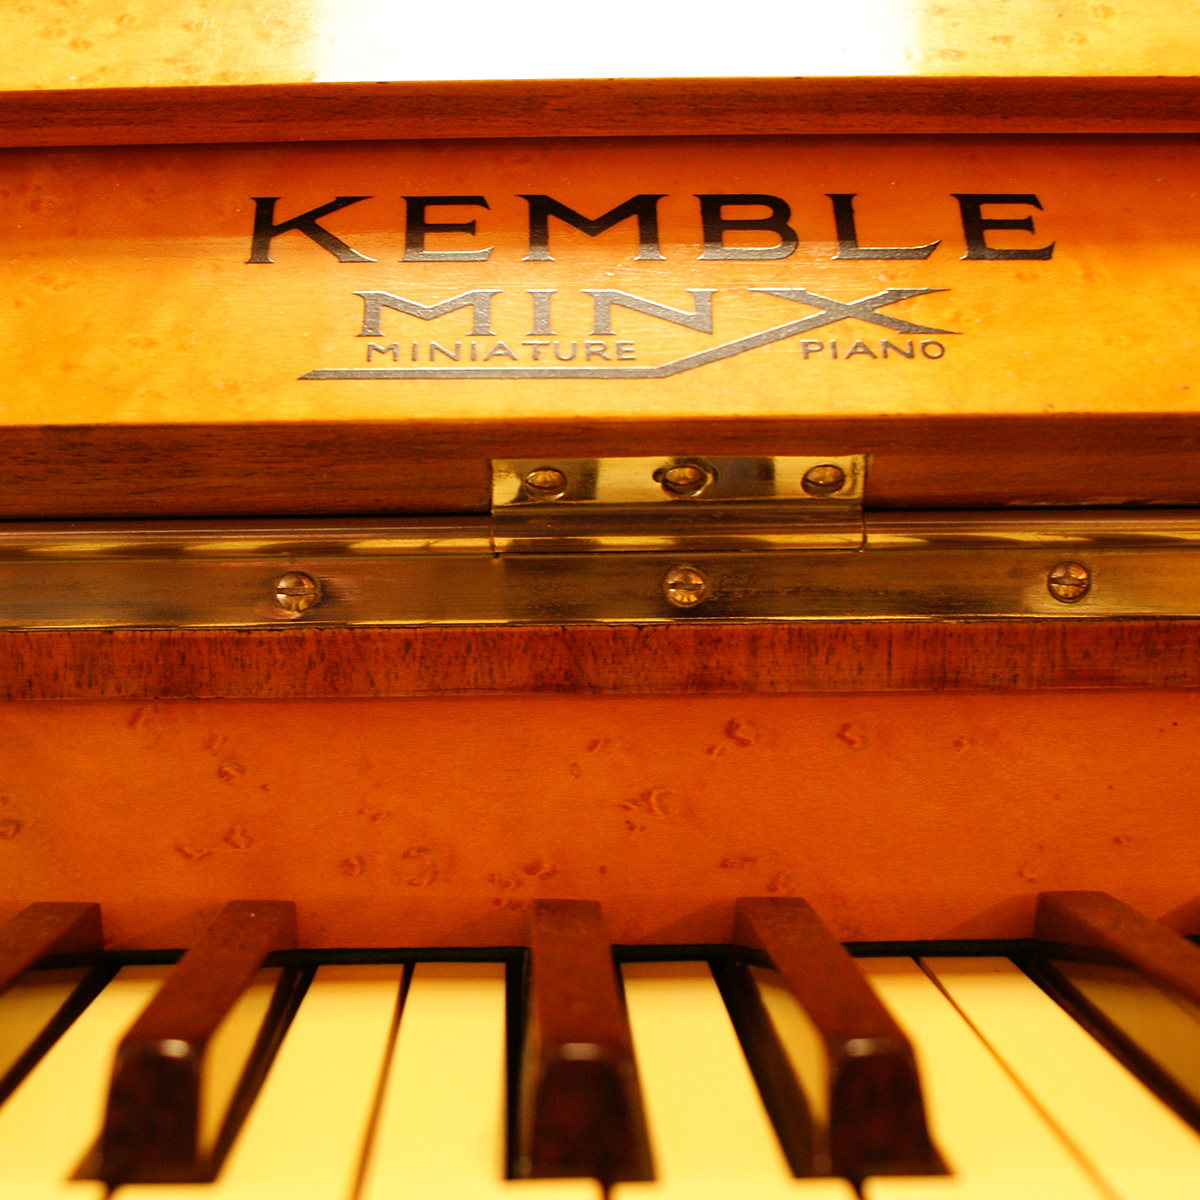 Kemble Minx